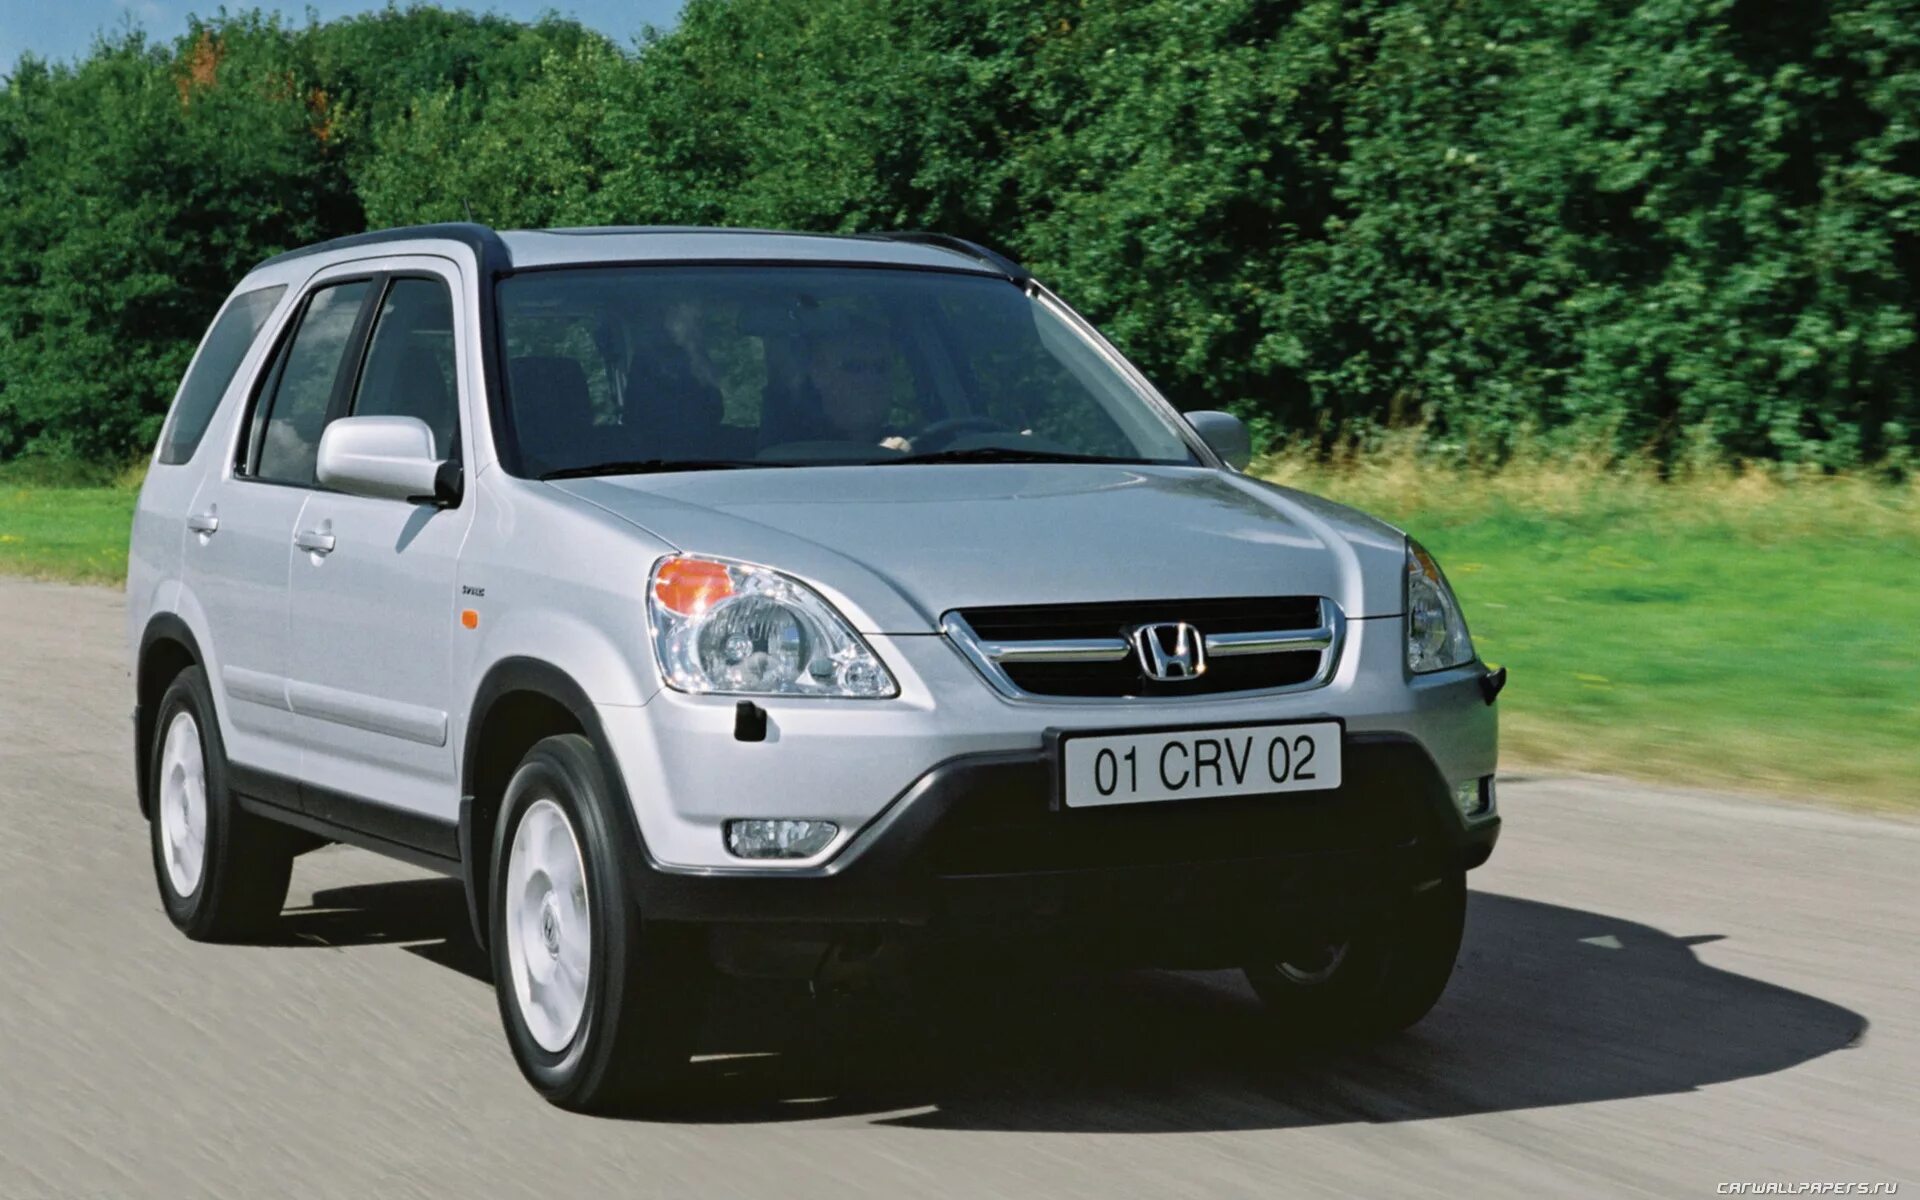 Honda CR-V 2002. Honda CRV 2002. Хонда CR-V 2002-2006. Honda CRV 2 2005.